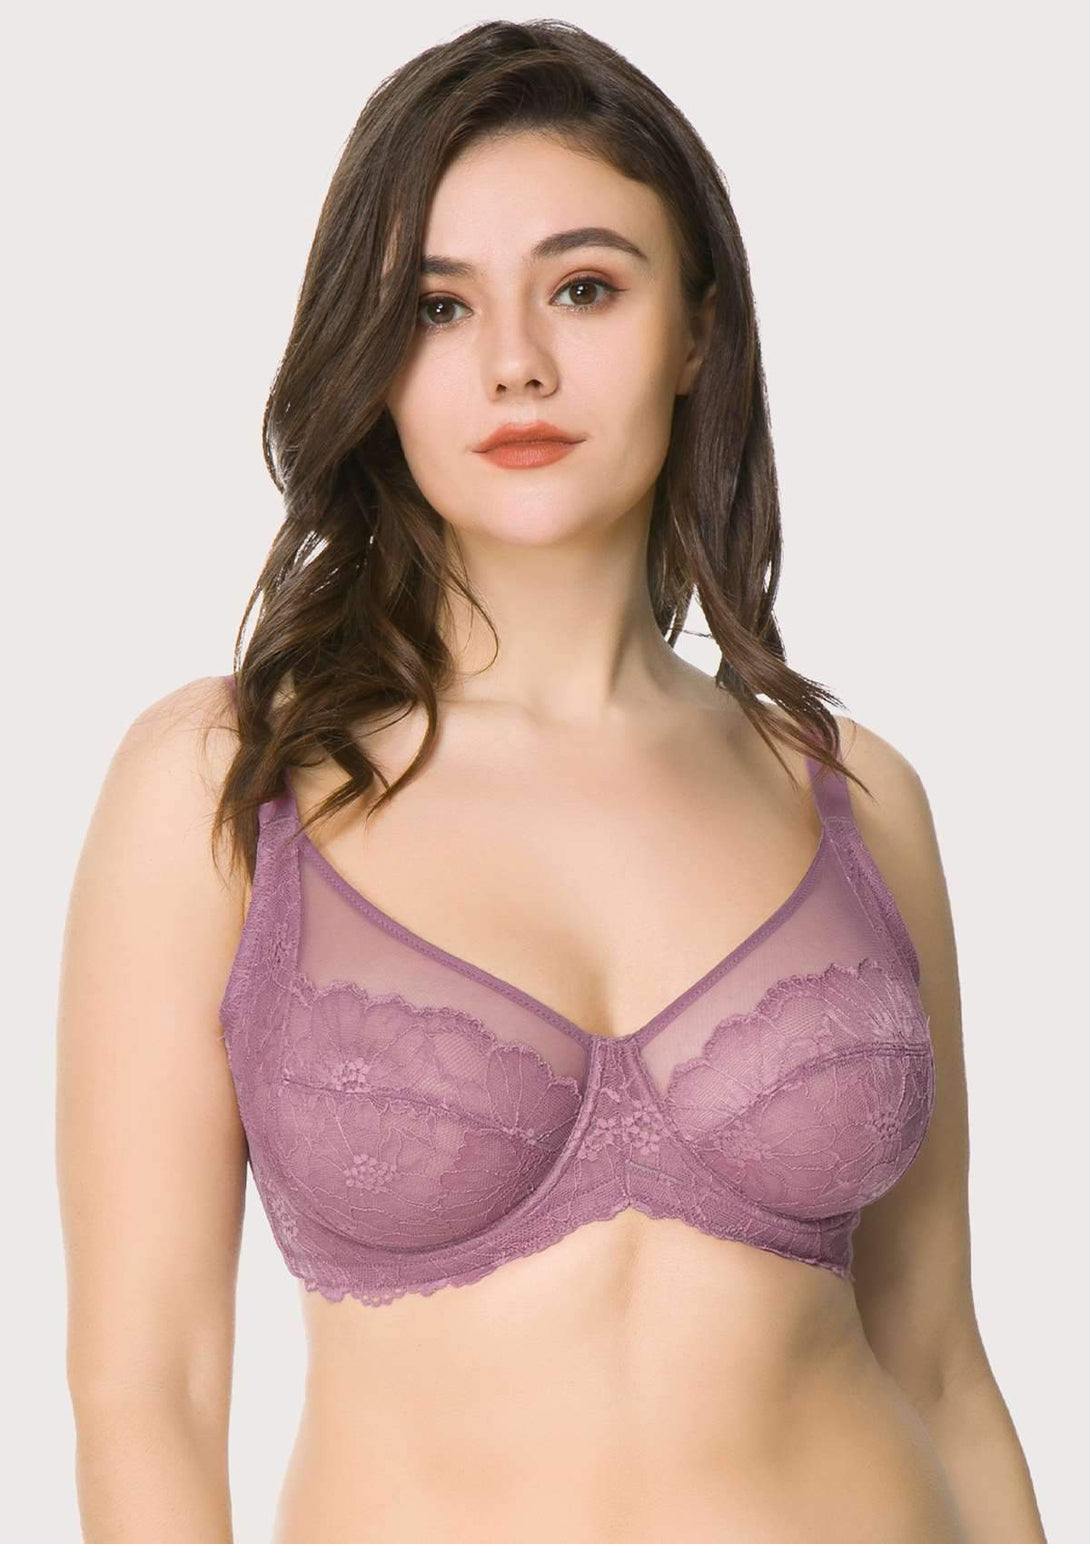 Thinly padded bra Bra Size 34C - Colors Bordo